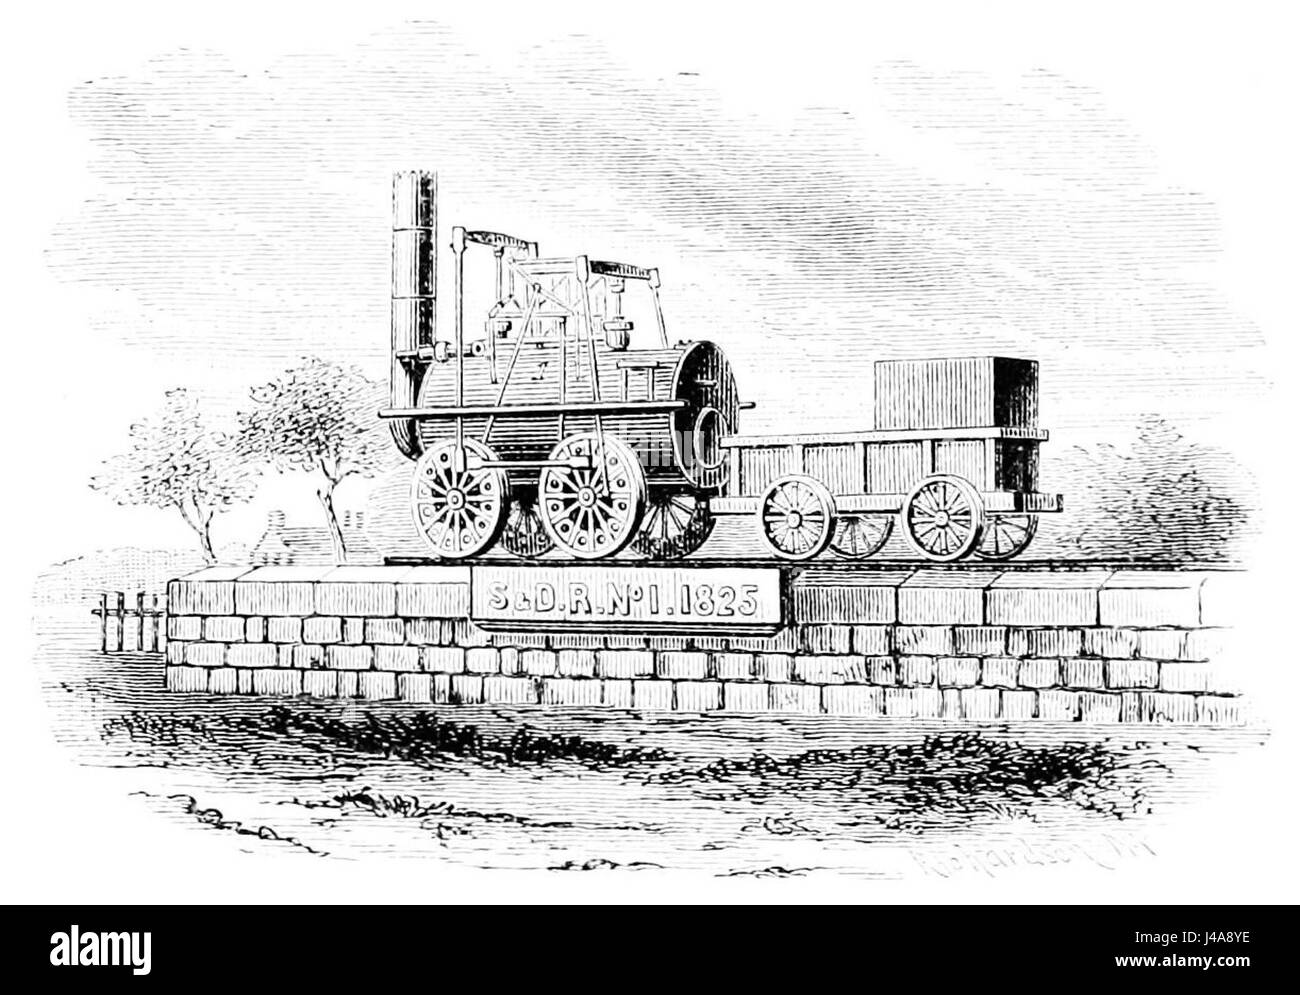 PSM V12 D283 Stockton and darlington engine no 1 1825 Stock Photo